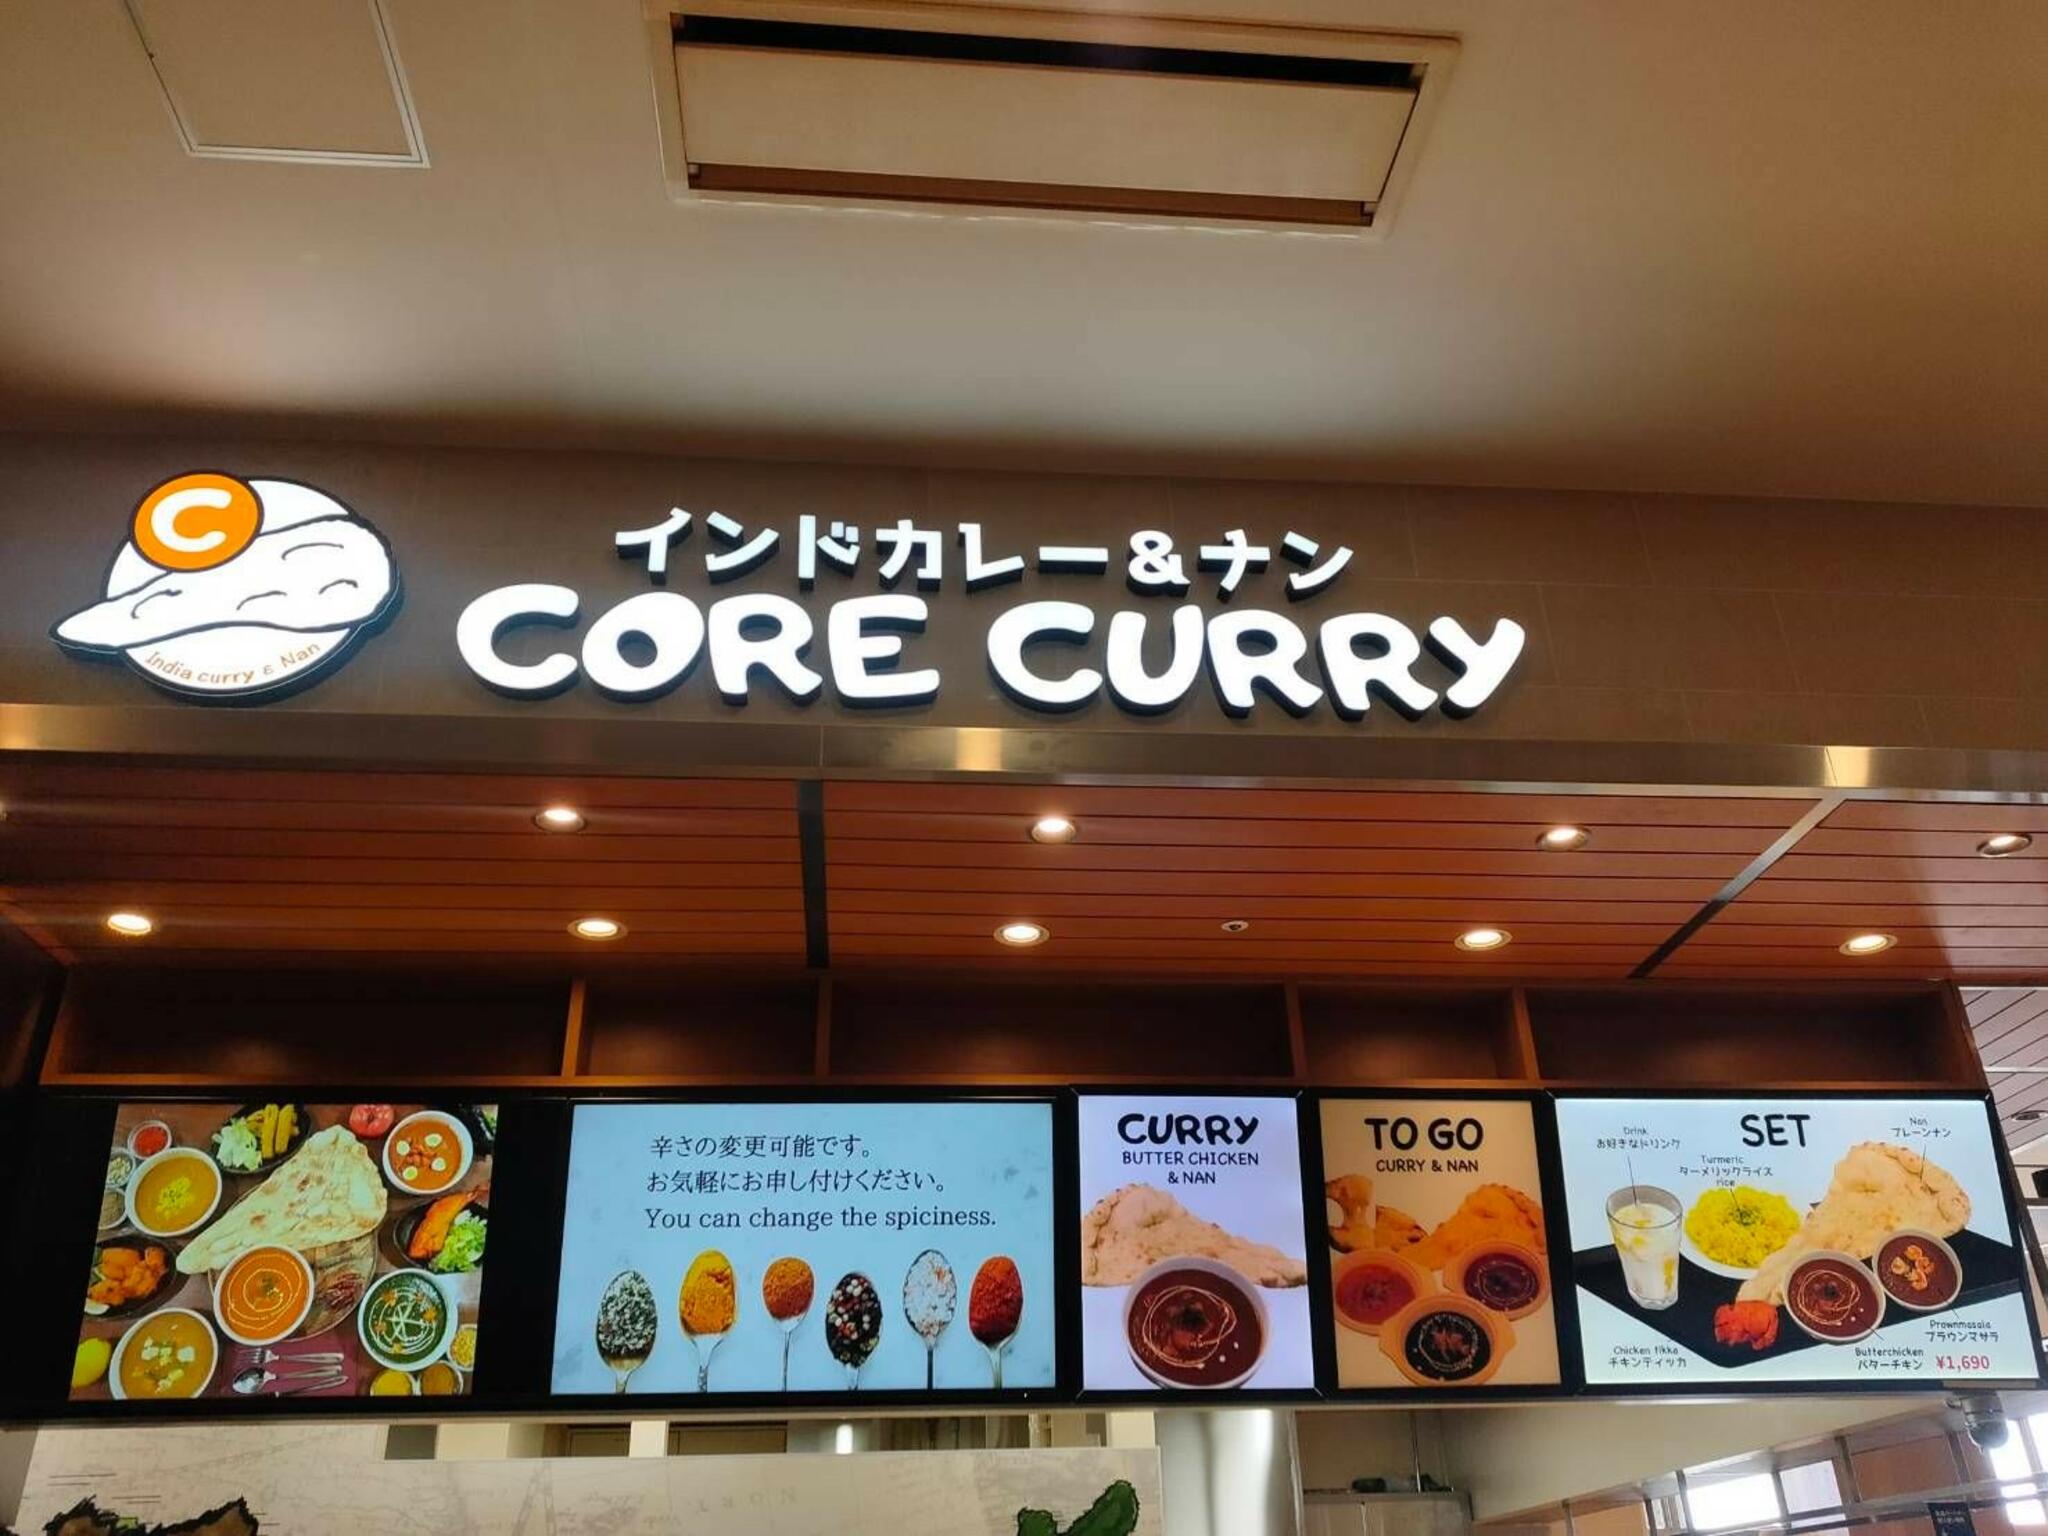 CORE CURRY イオンモール沖縄ライカム店の代表写真6